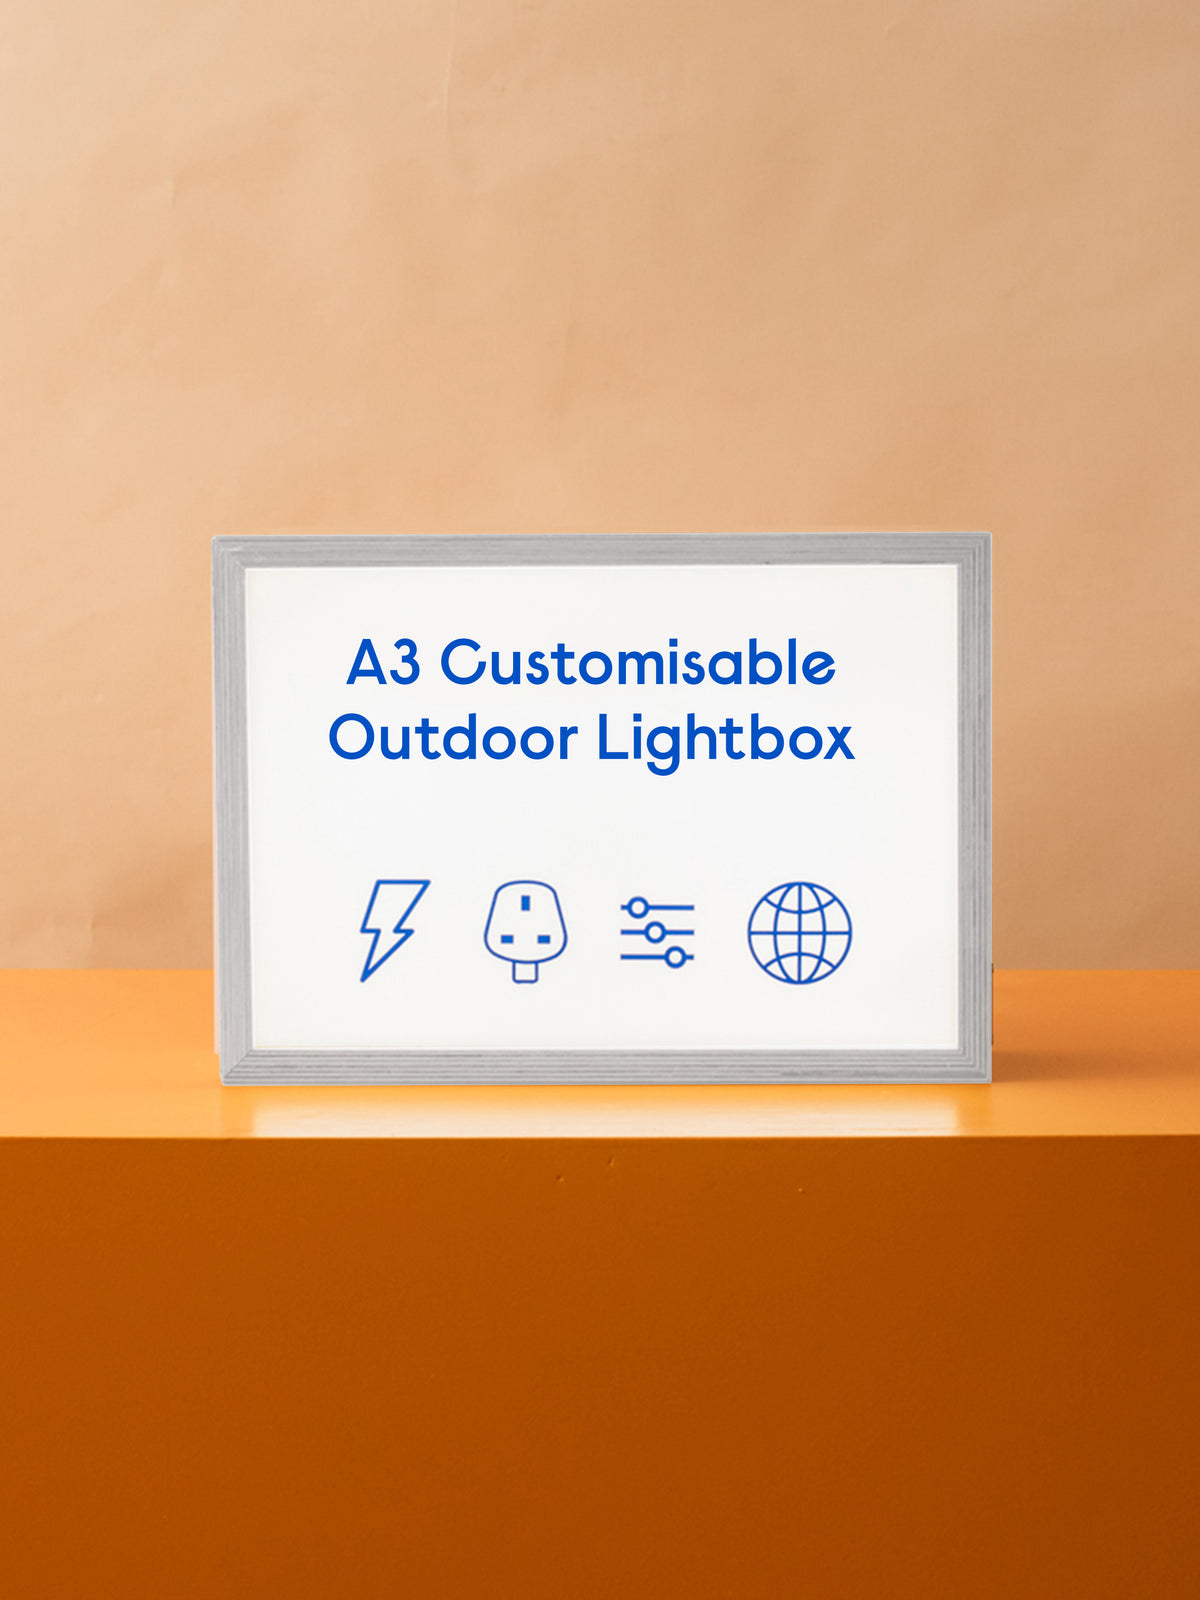 A3 Outdoor Lightbox